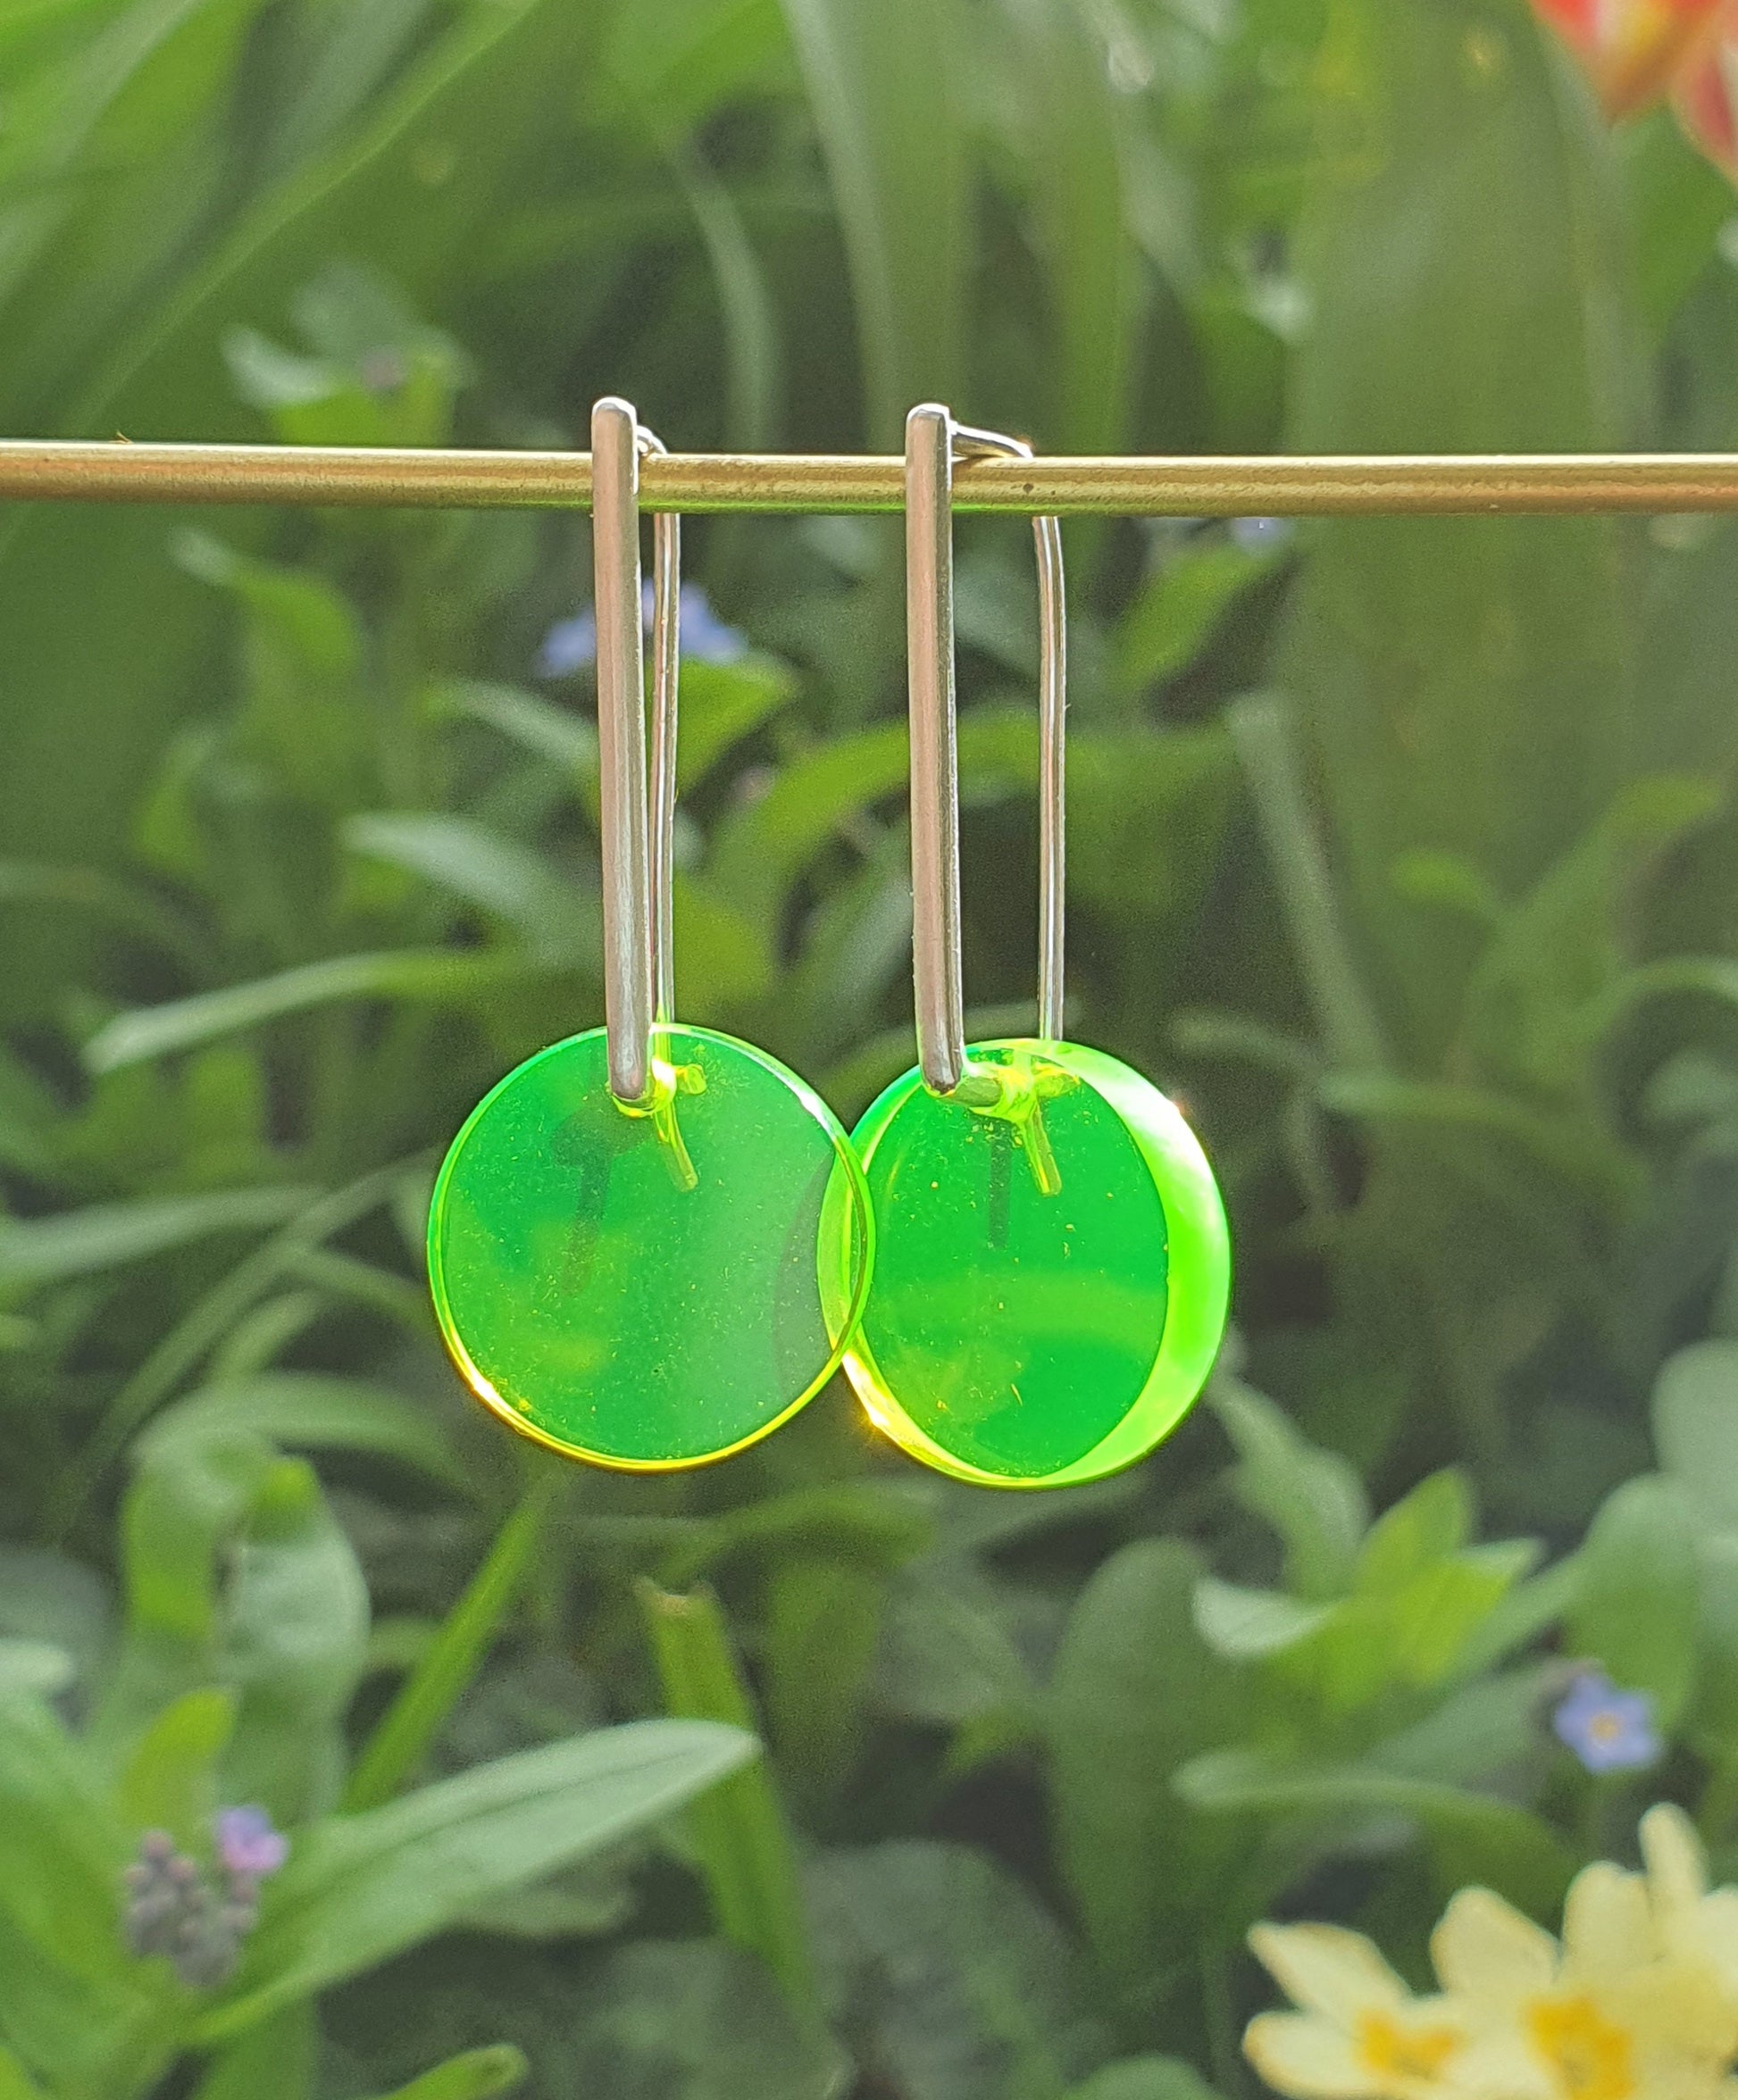 Acid green perspex earrings www.barbaraspence.co.uk